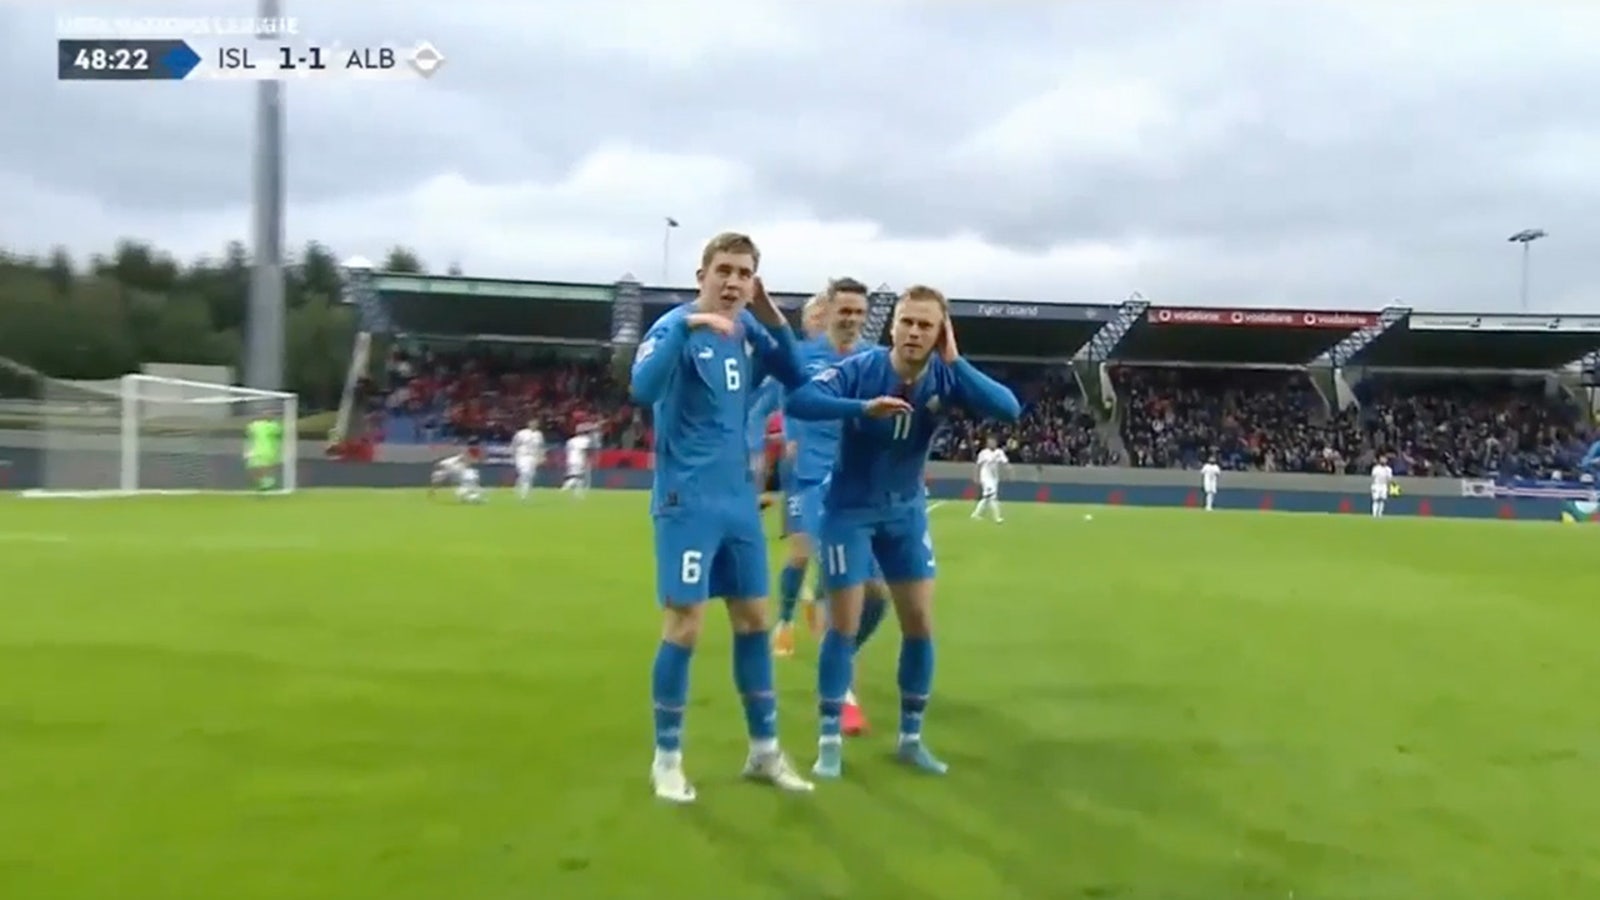 Iceland's Jon Dagur Thorsteinsson scores equalizer in 49th minute